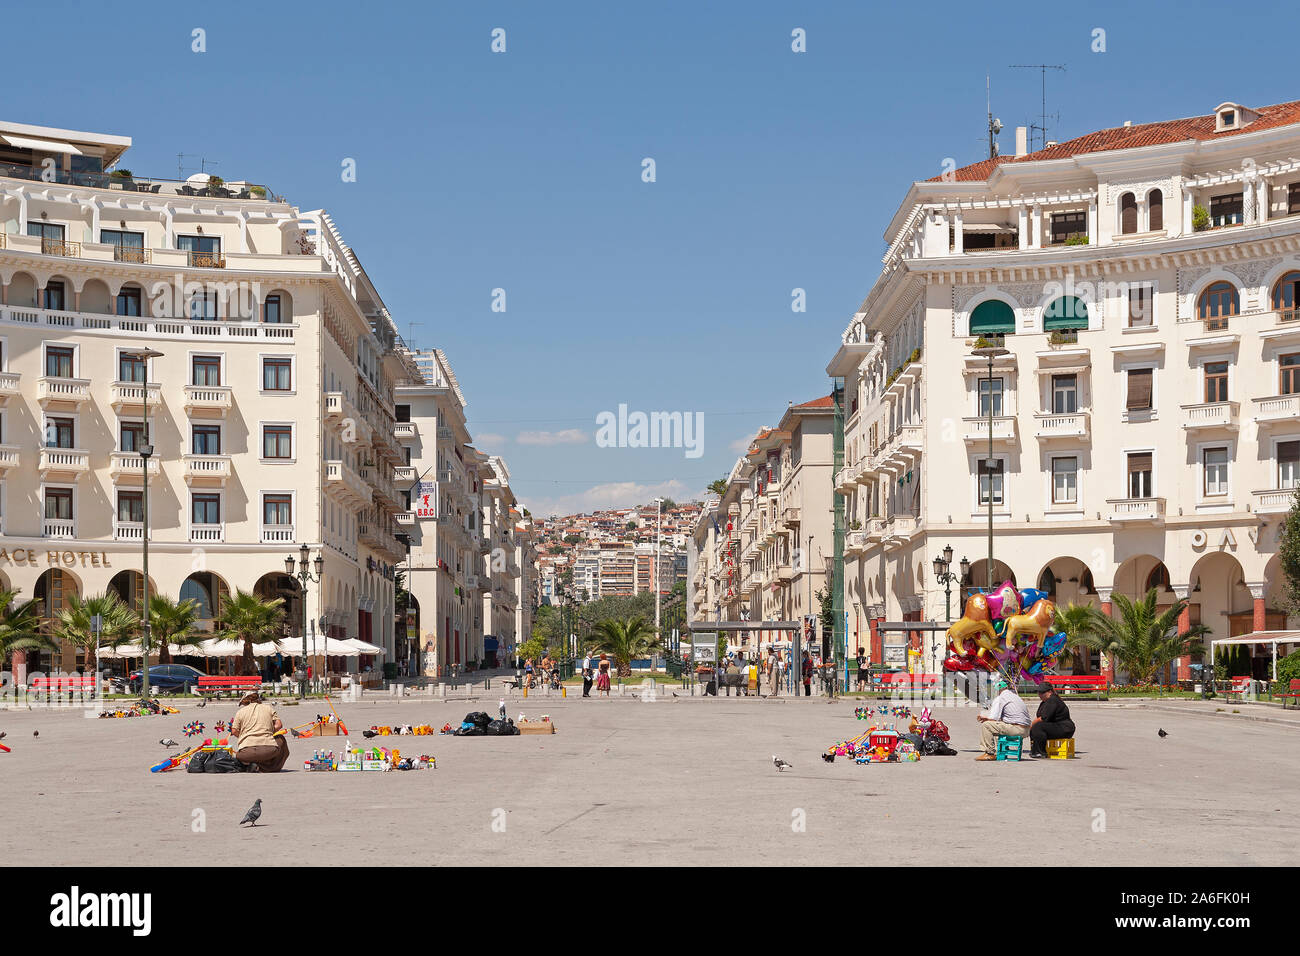 The square Platia Aristotelous in Saloniki, Macedonia, Greece. Stock Photo